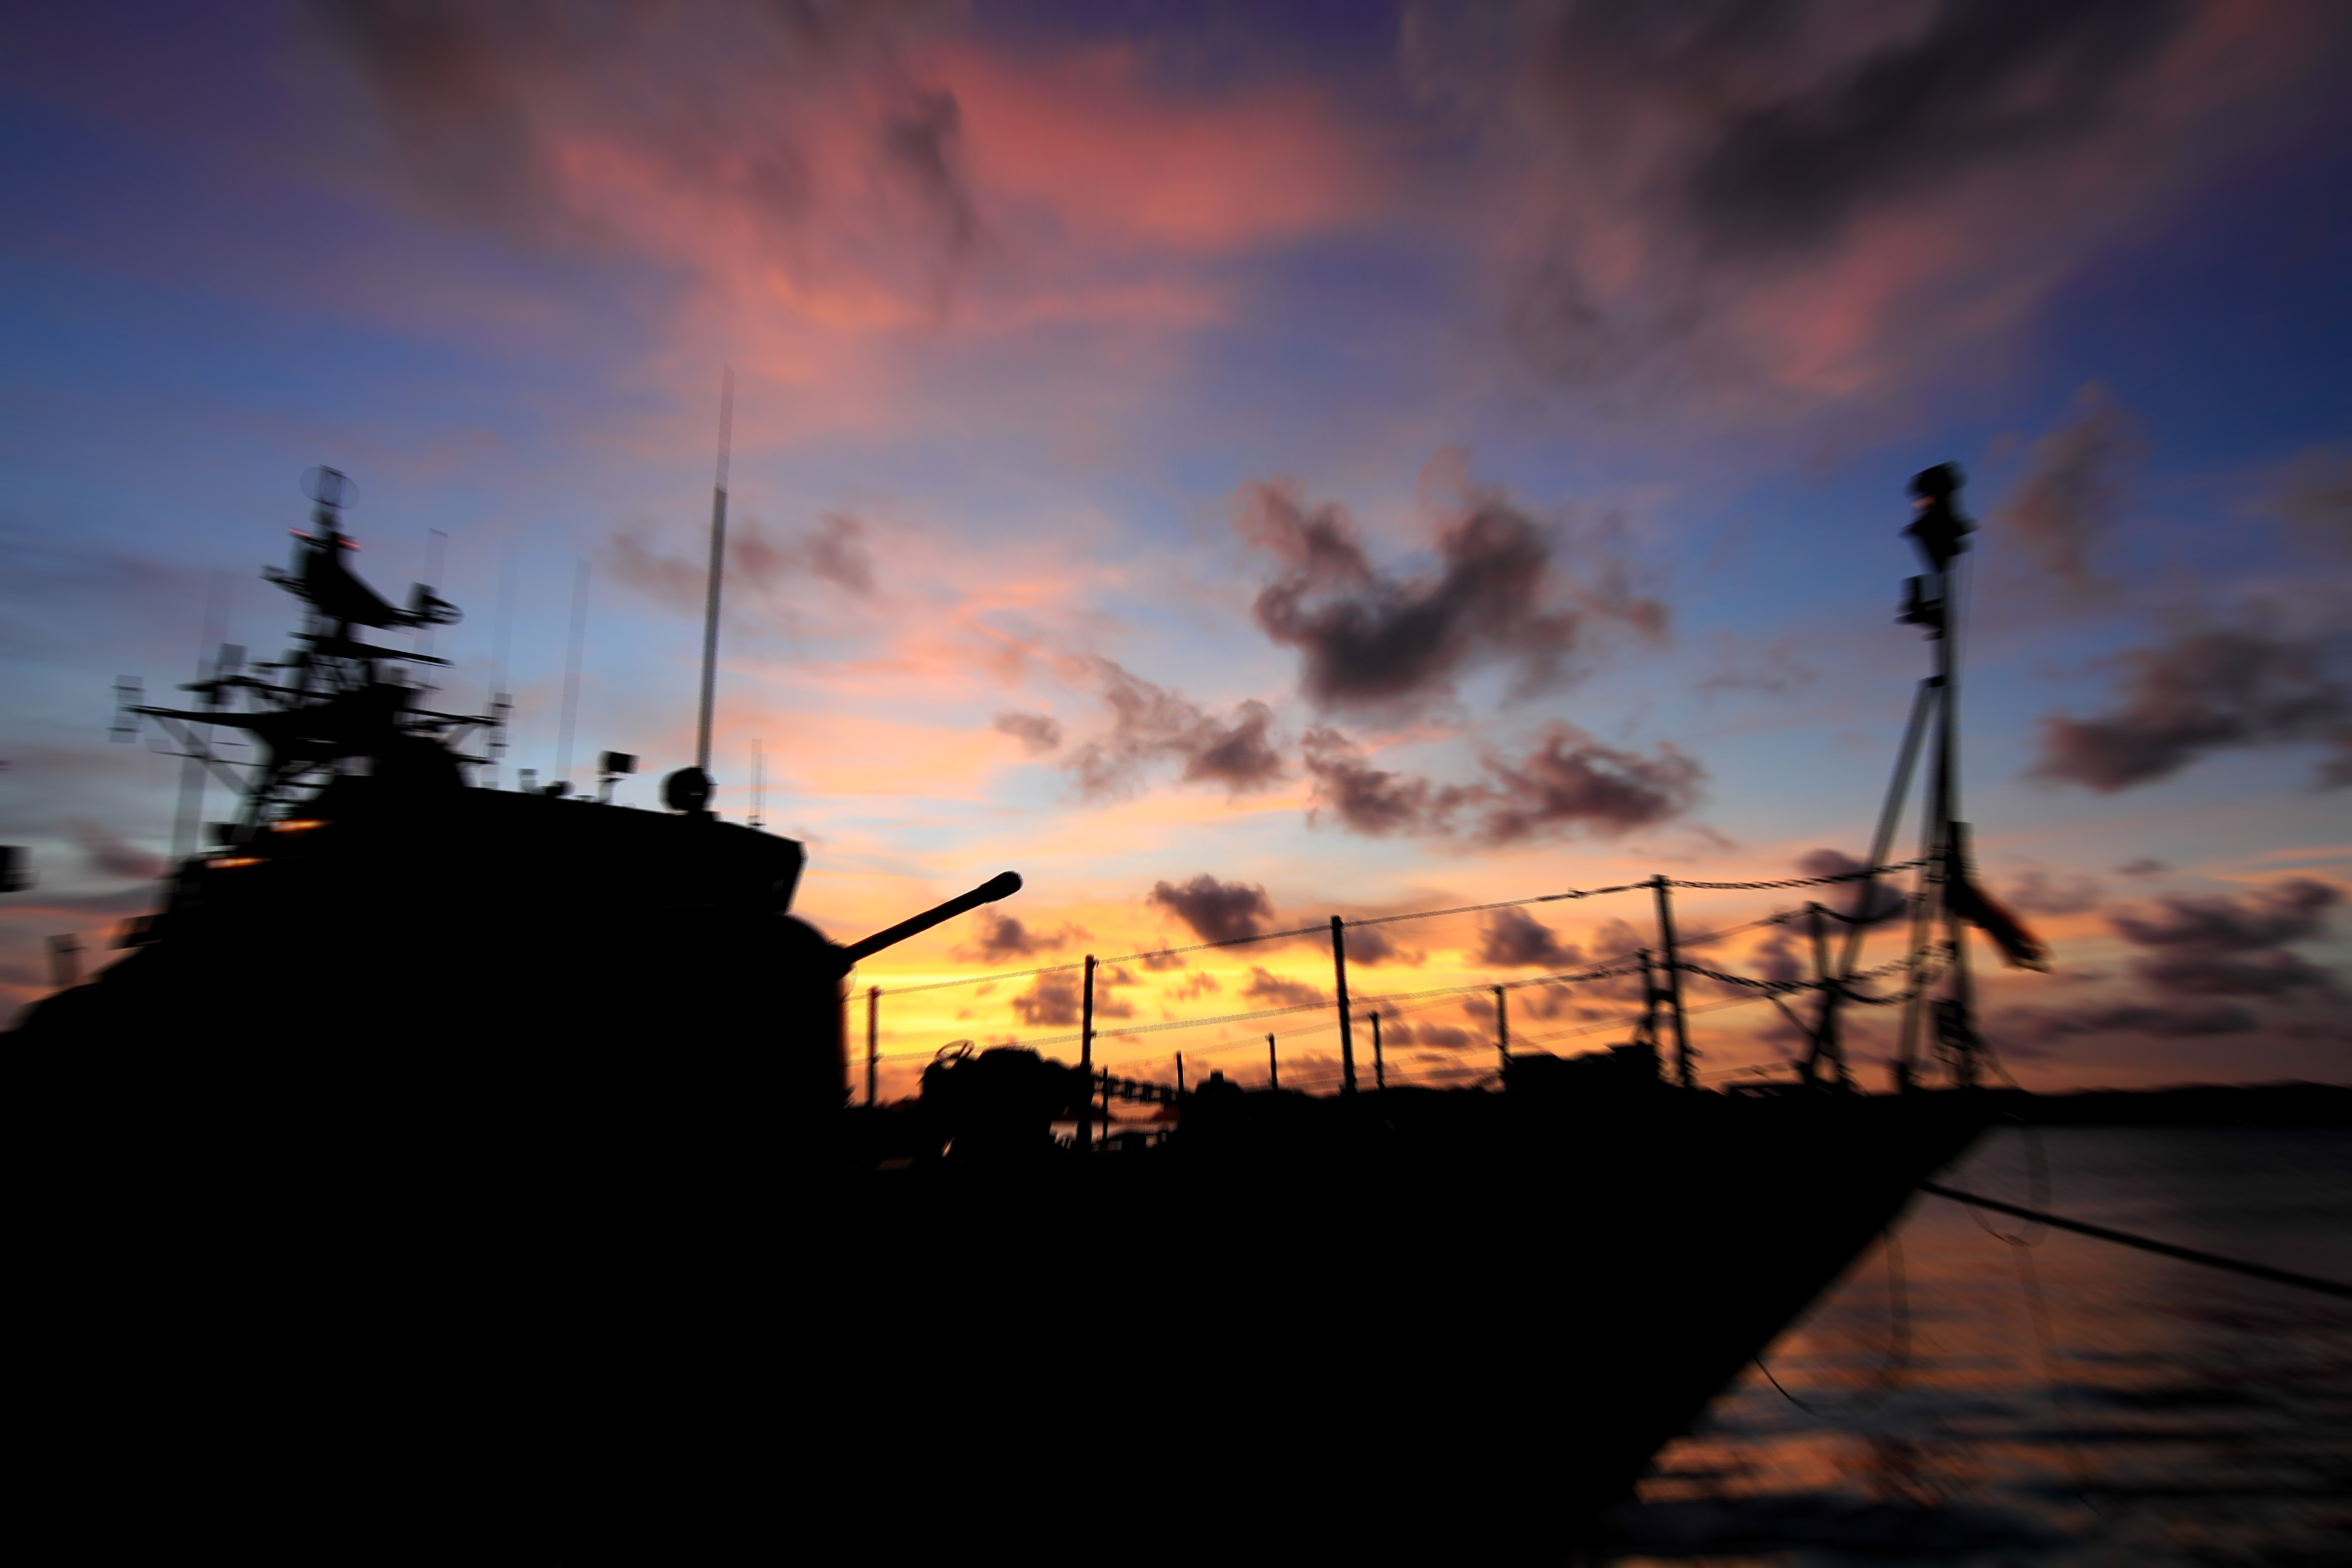 Military ship at sunset